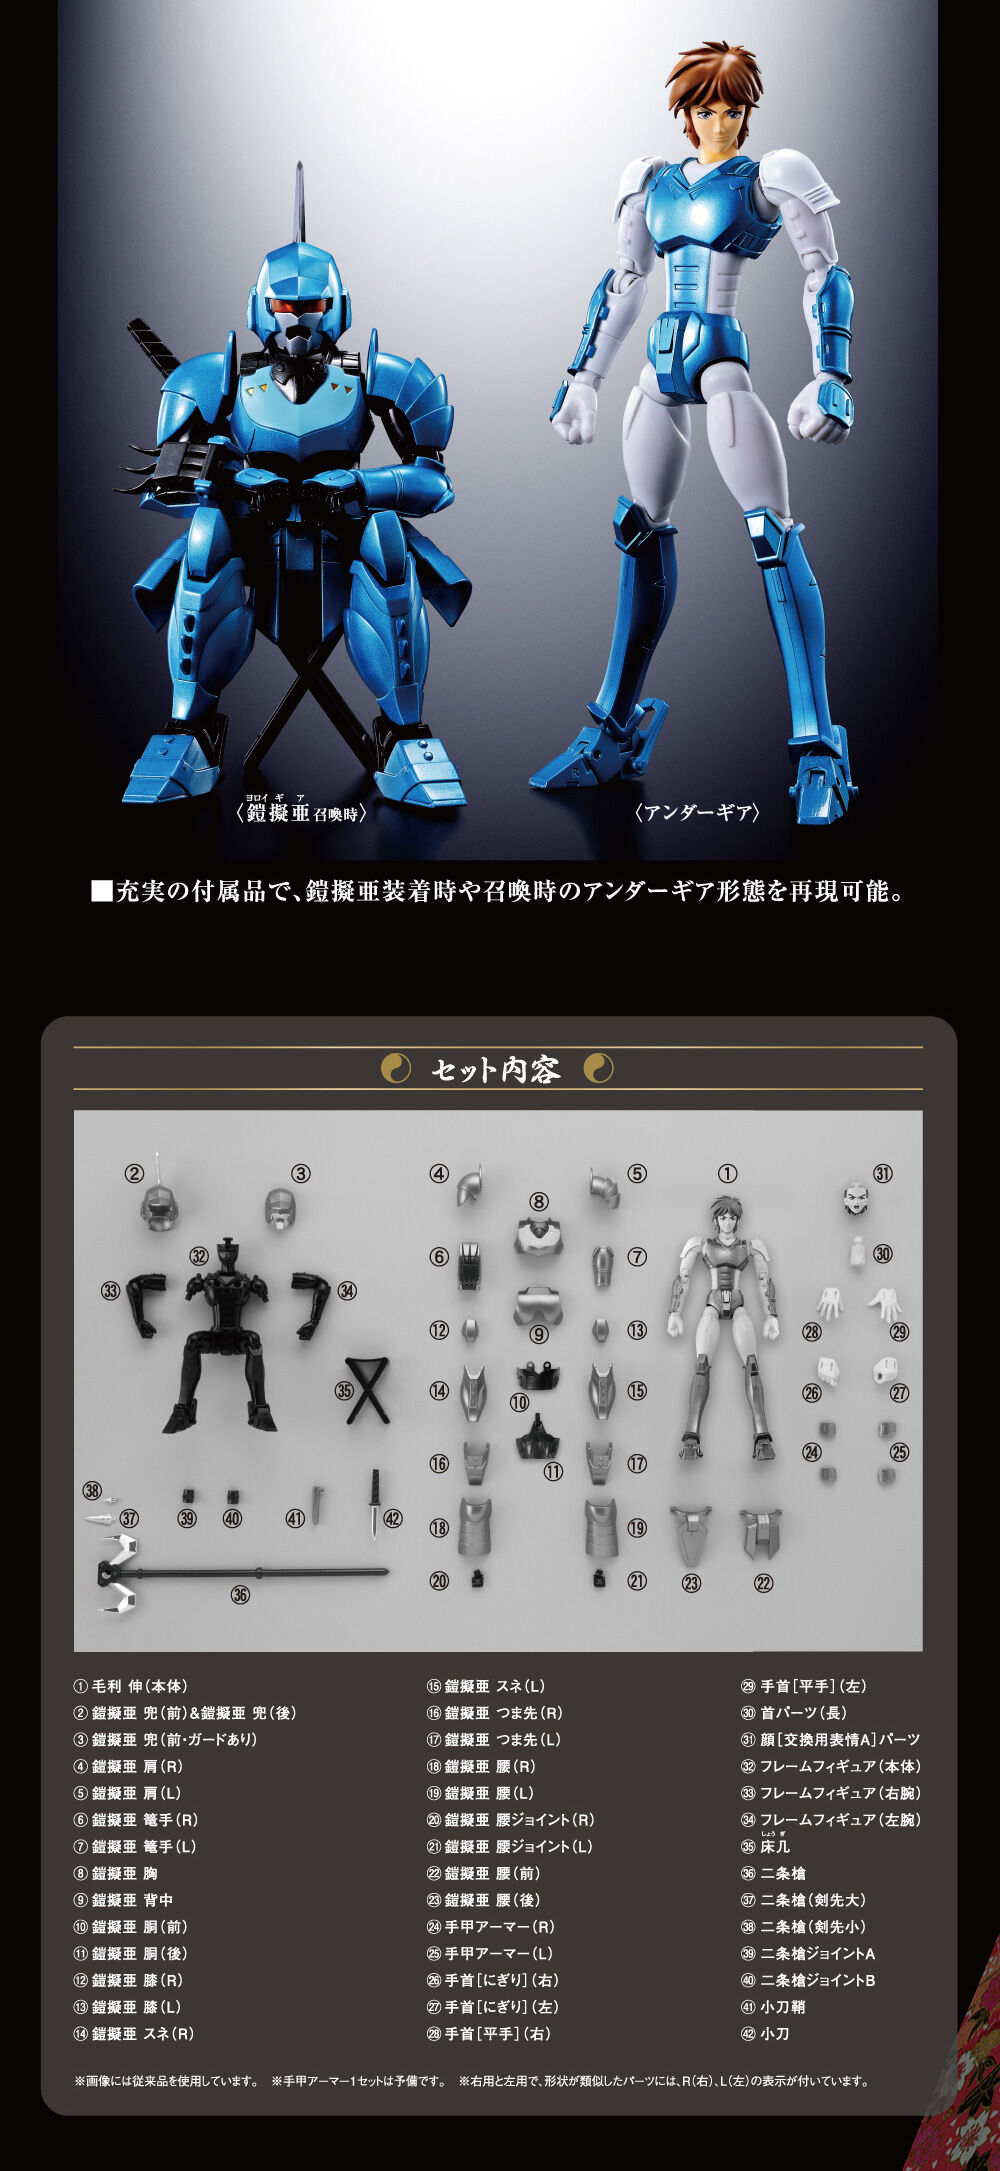 armor-plus-yoroiden-samurai-troopers-shin-no-suiko-special-colours (11)